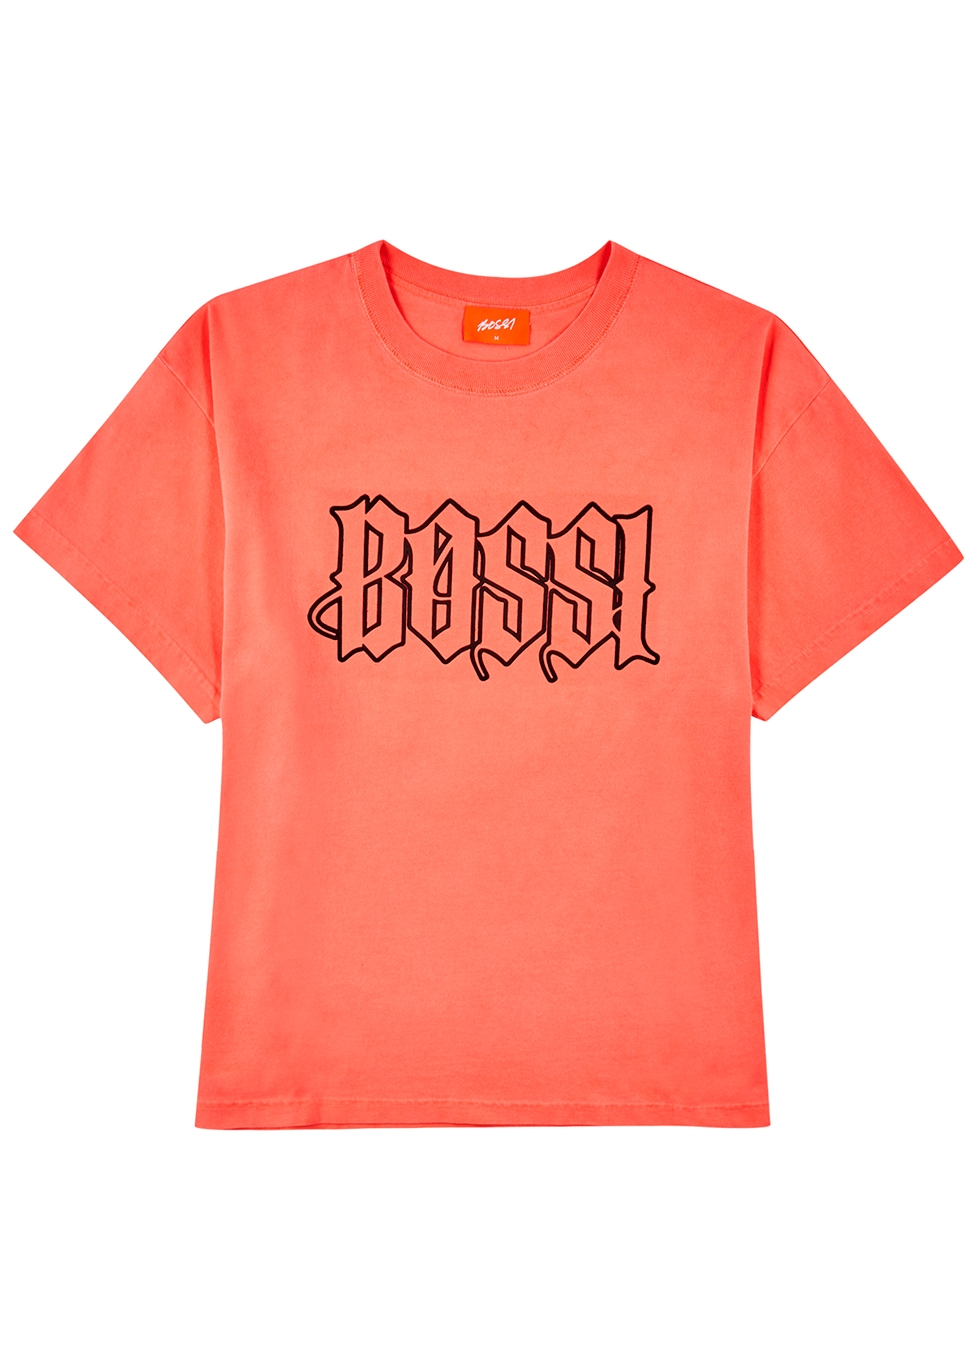 BOSSI Sportswear Neon pink logo cotton T-shirt